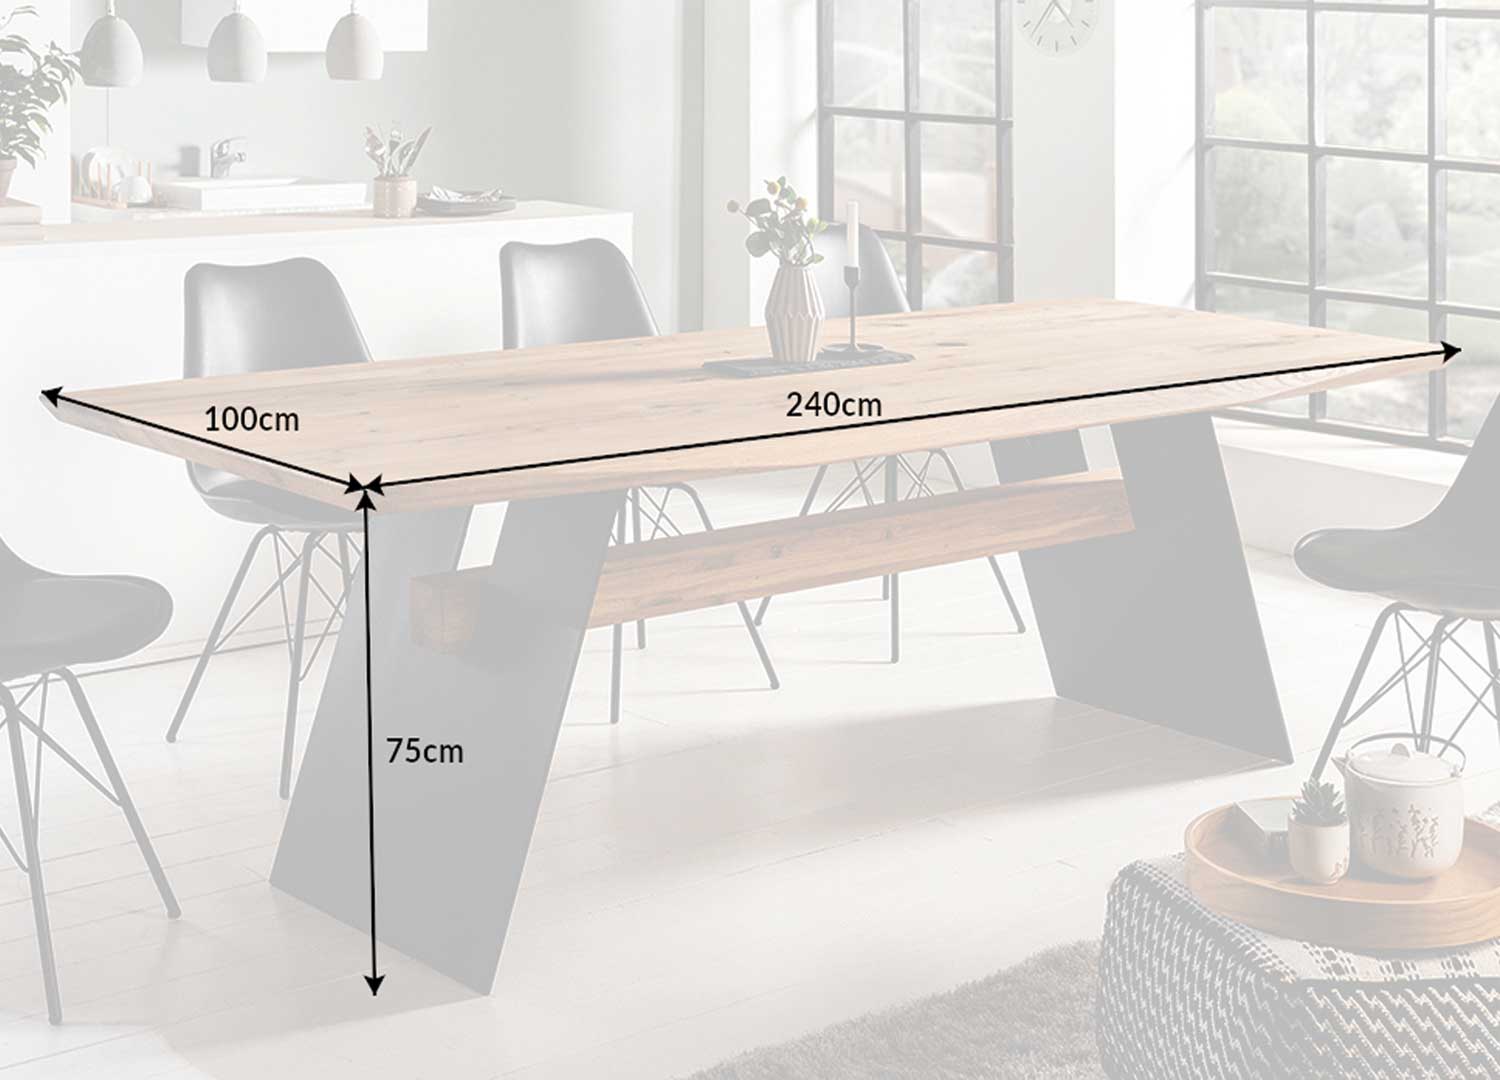 dimensions de la table de repas 240 cm en bois massif